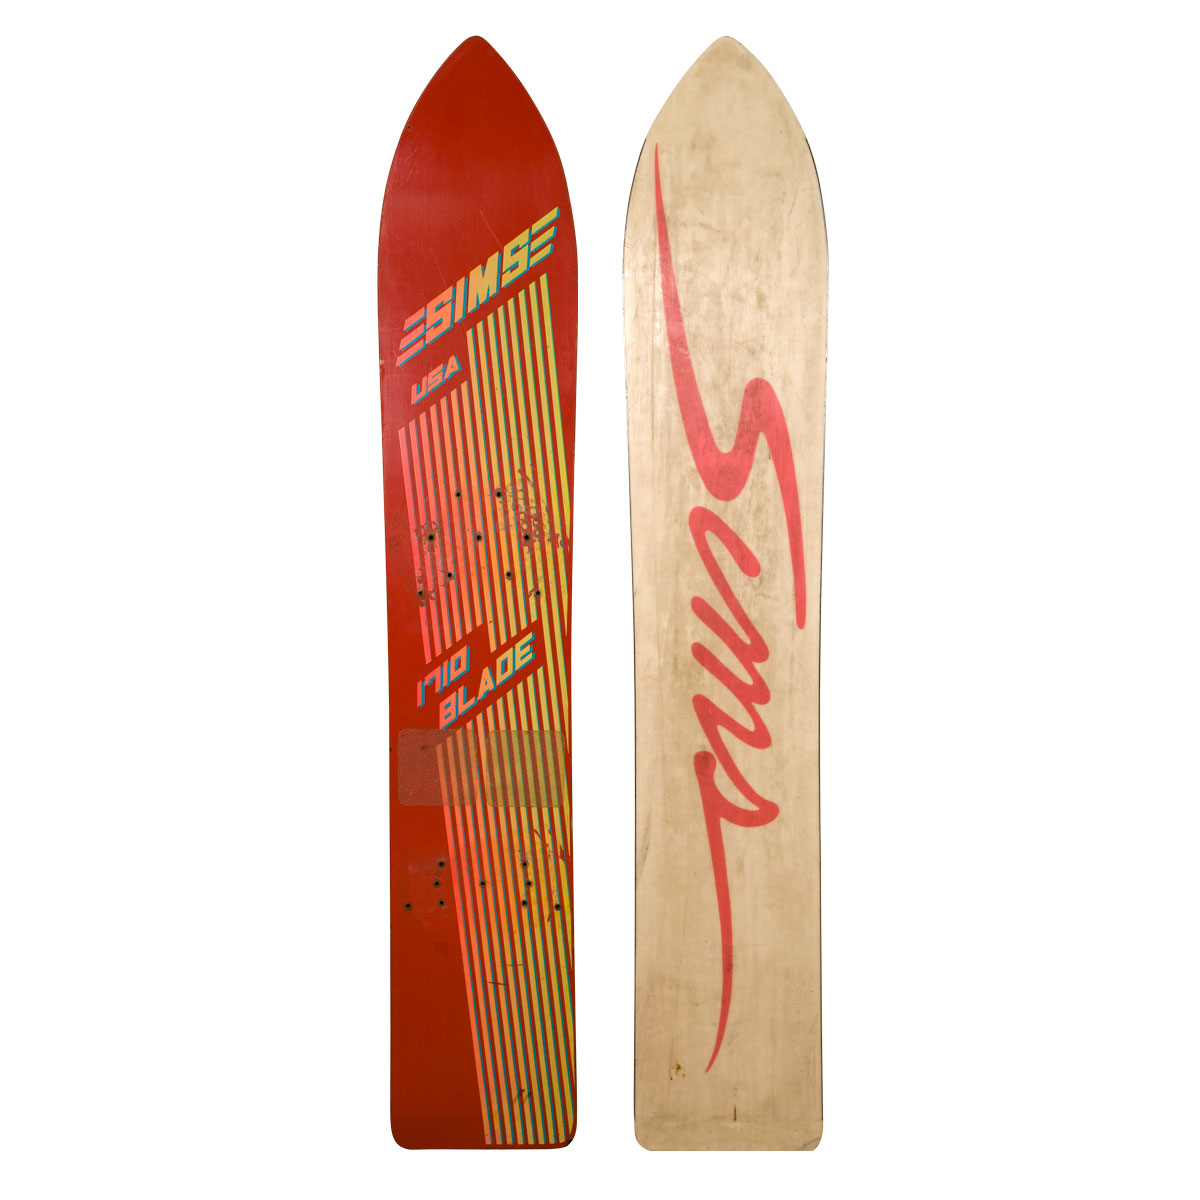 Sims Blade 1710 Vintage Snowboard